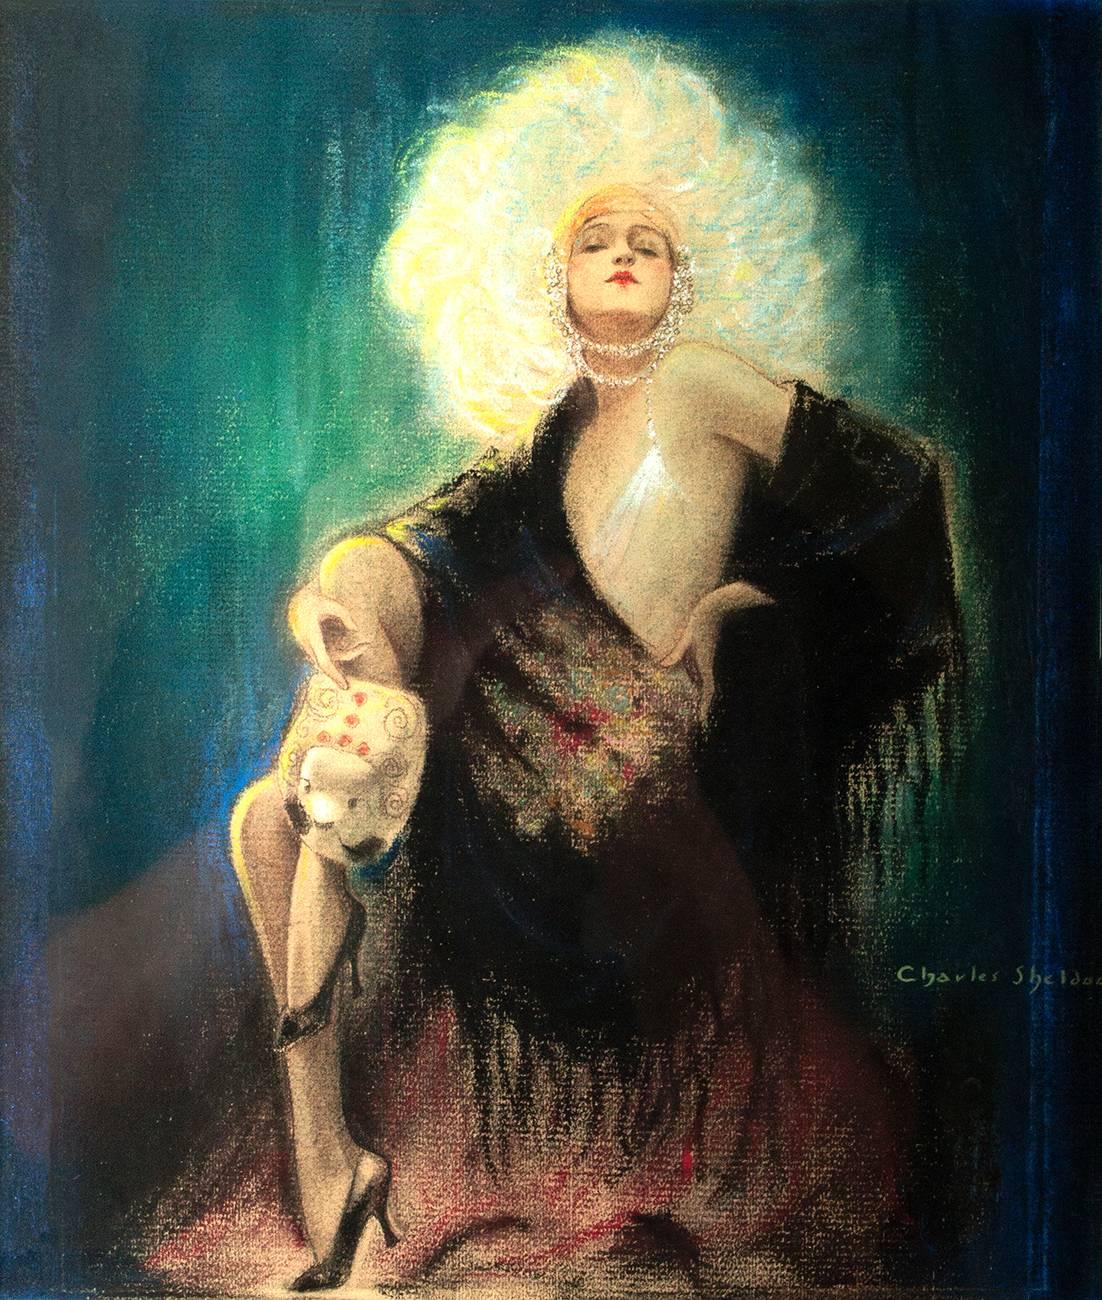 Charles Sheldon Portrait Painting - Costumed Ziegfeld Follies Girl With Mask